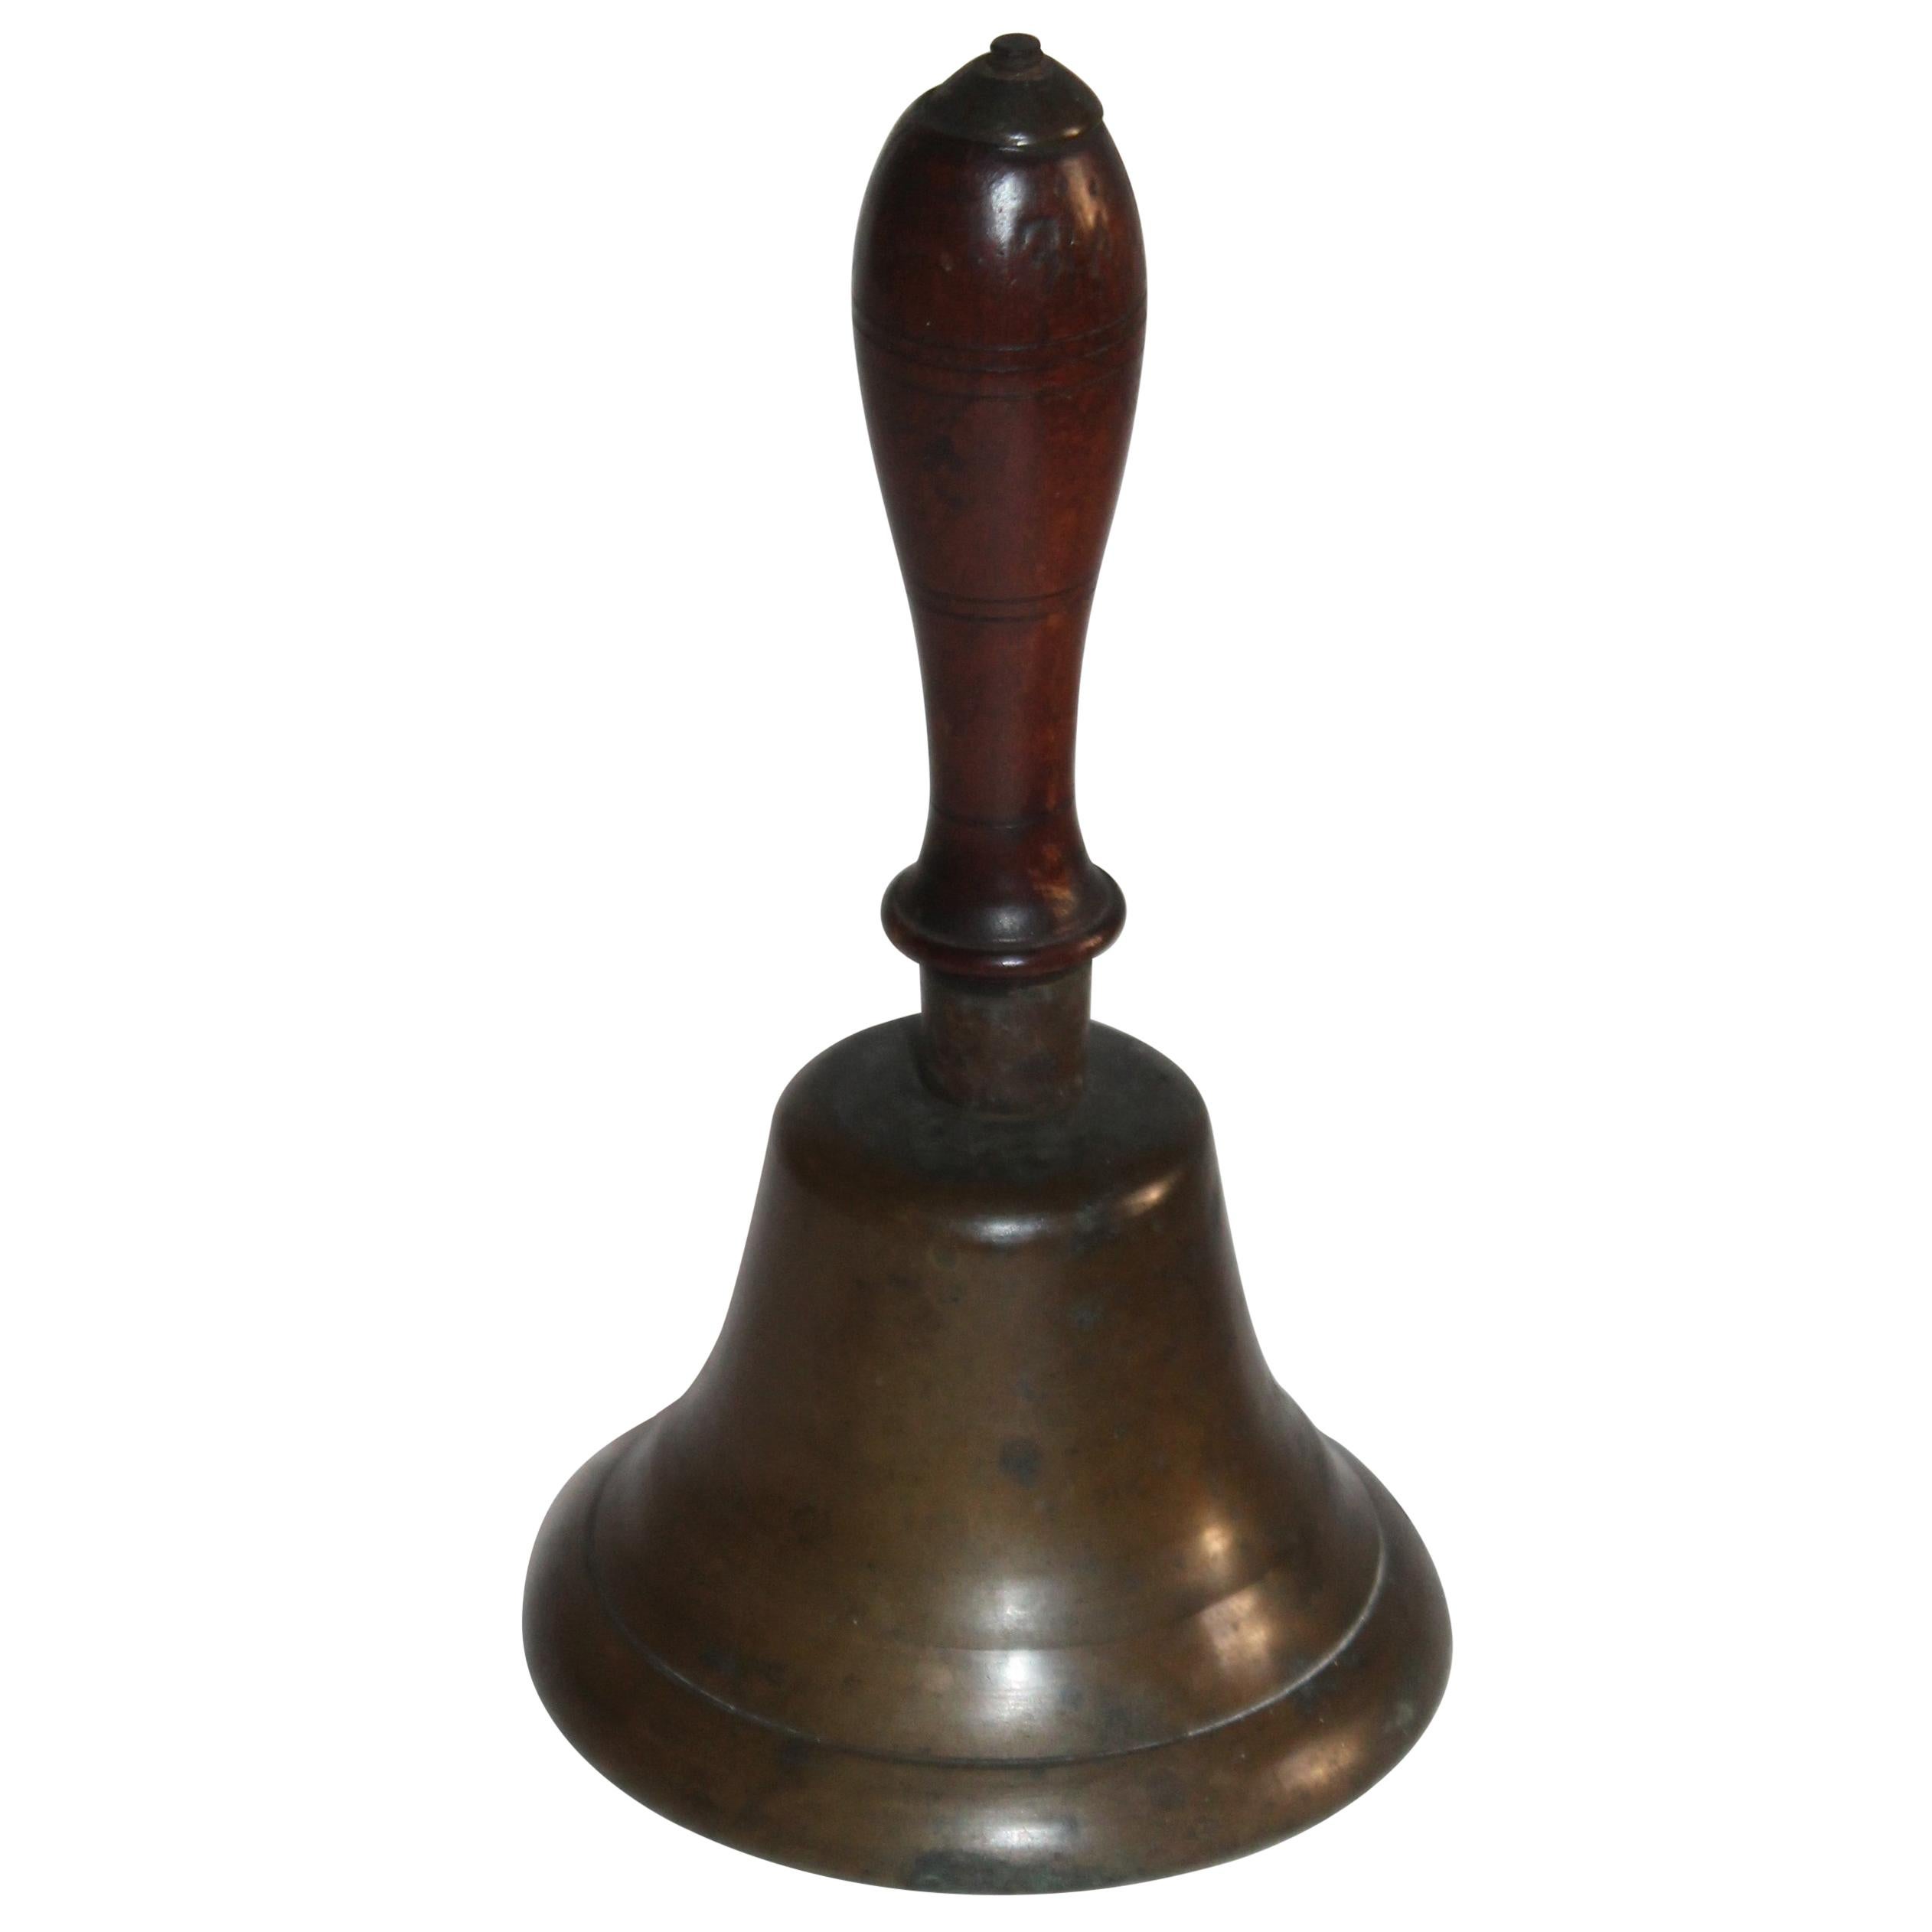 19th Century Dinner or School Bell